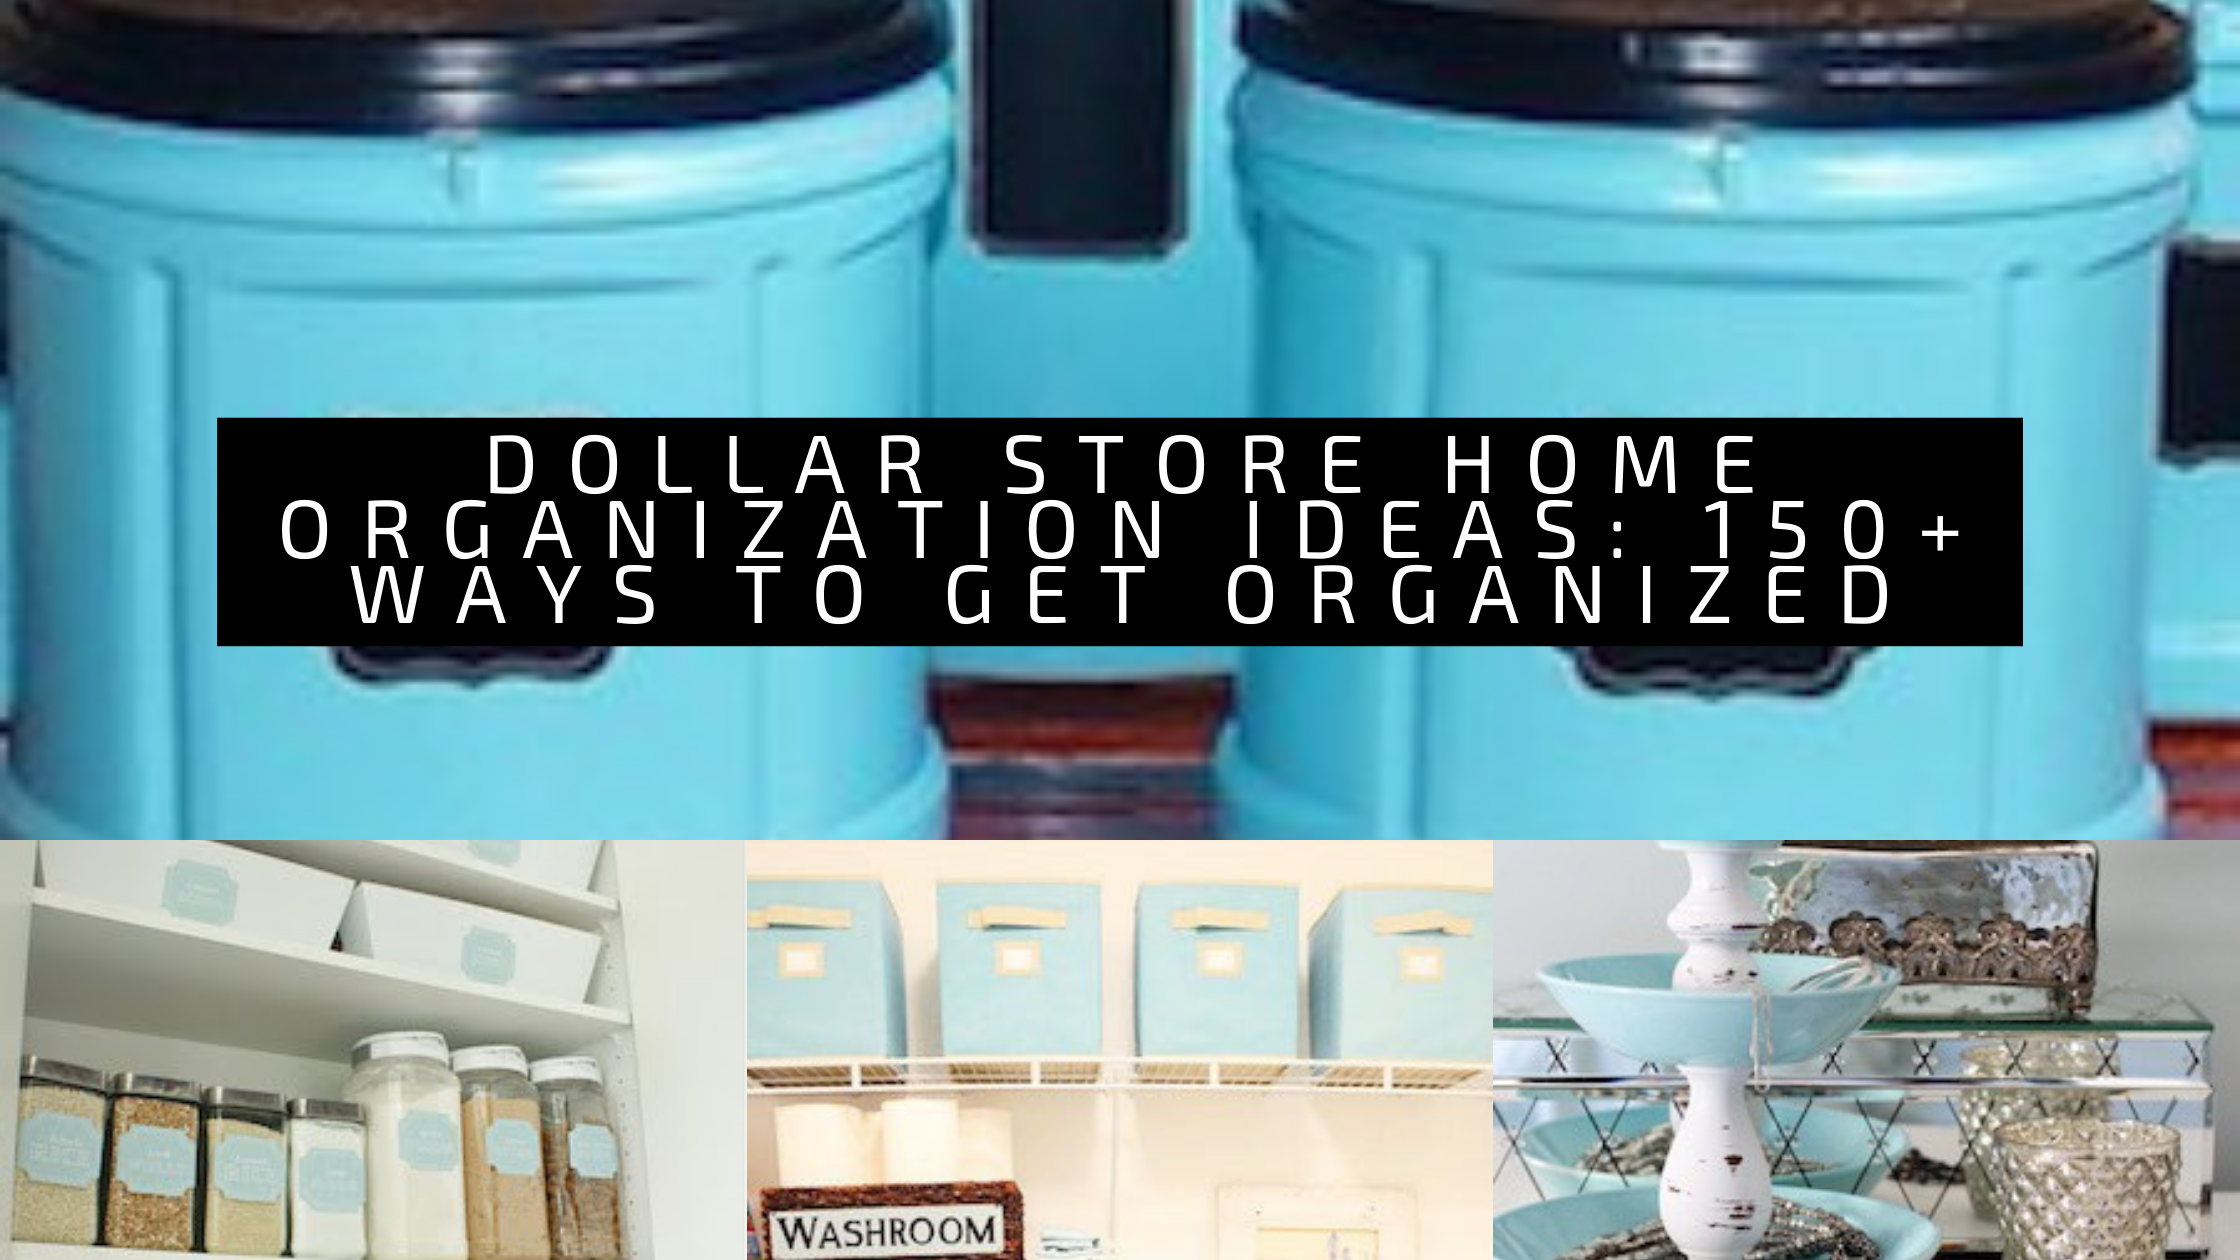 Dollar Store Home Organization Ideas: 150+ Ways to Get Organized 19